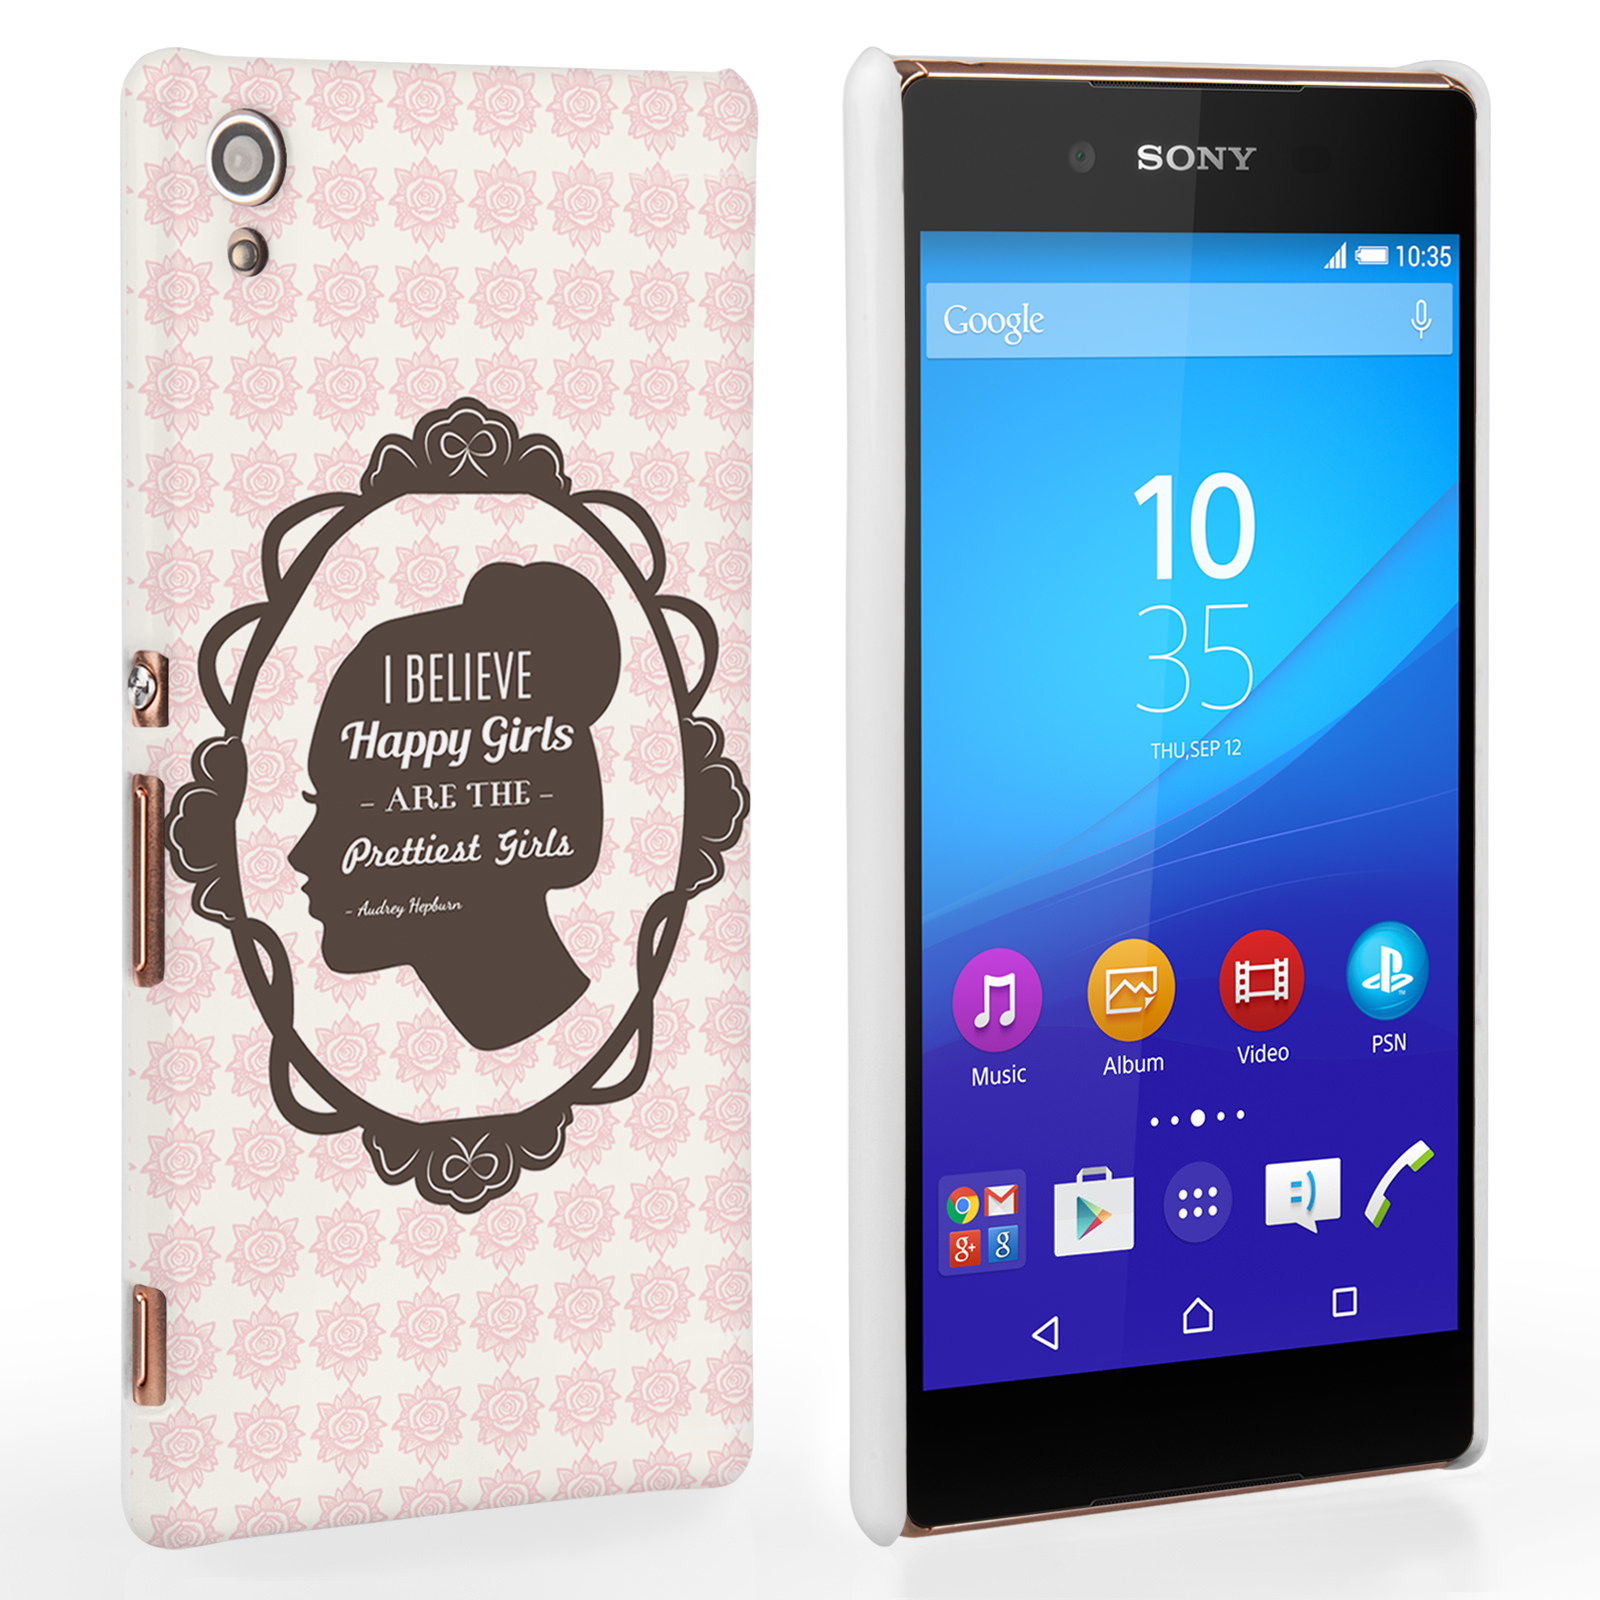 Caseflex Sony Xperia Z3 Plus Audrey Hepburn ‘Happy Girls’ Quote Case